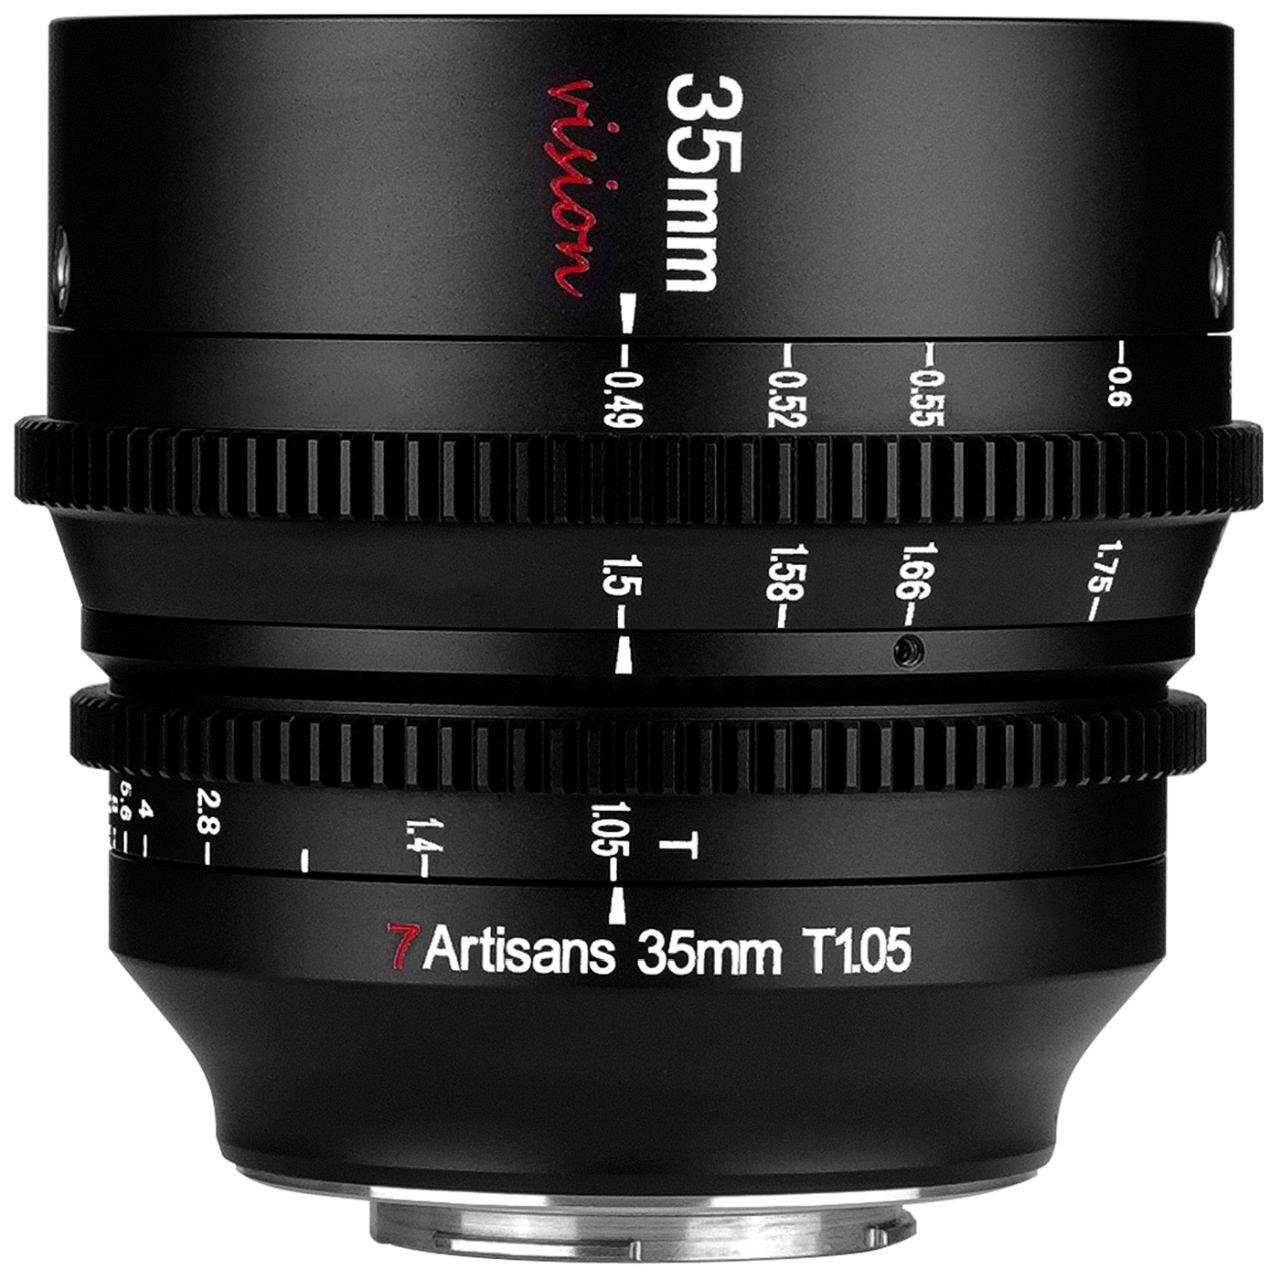 Zoomobjektiv RF T1.05 Canon Vision 7Artisans 35mm